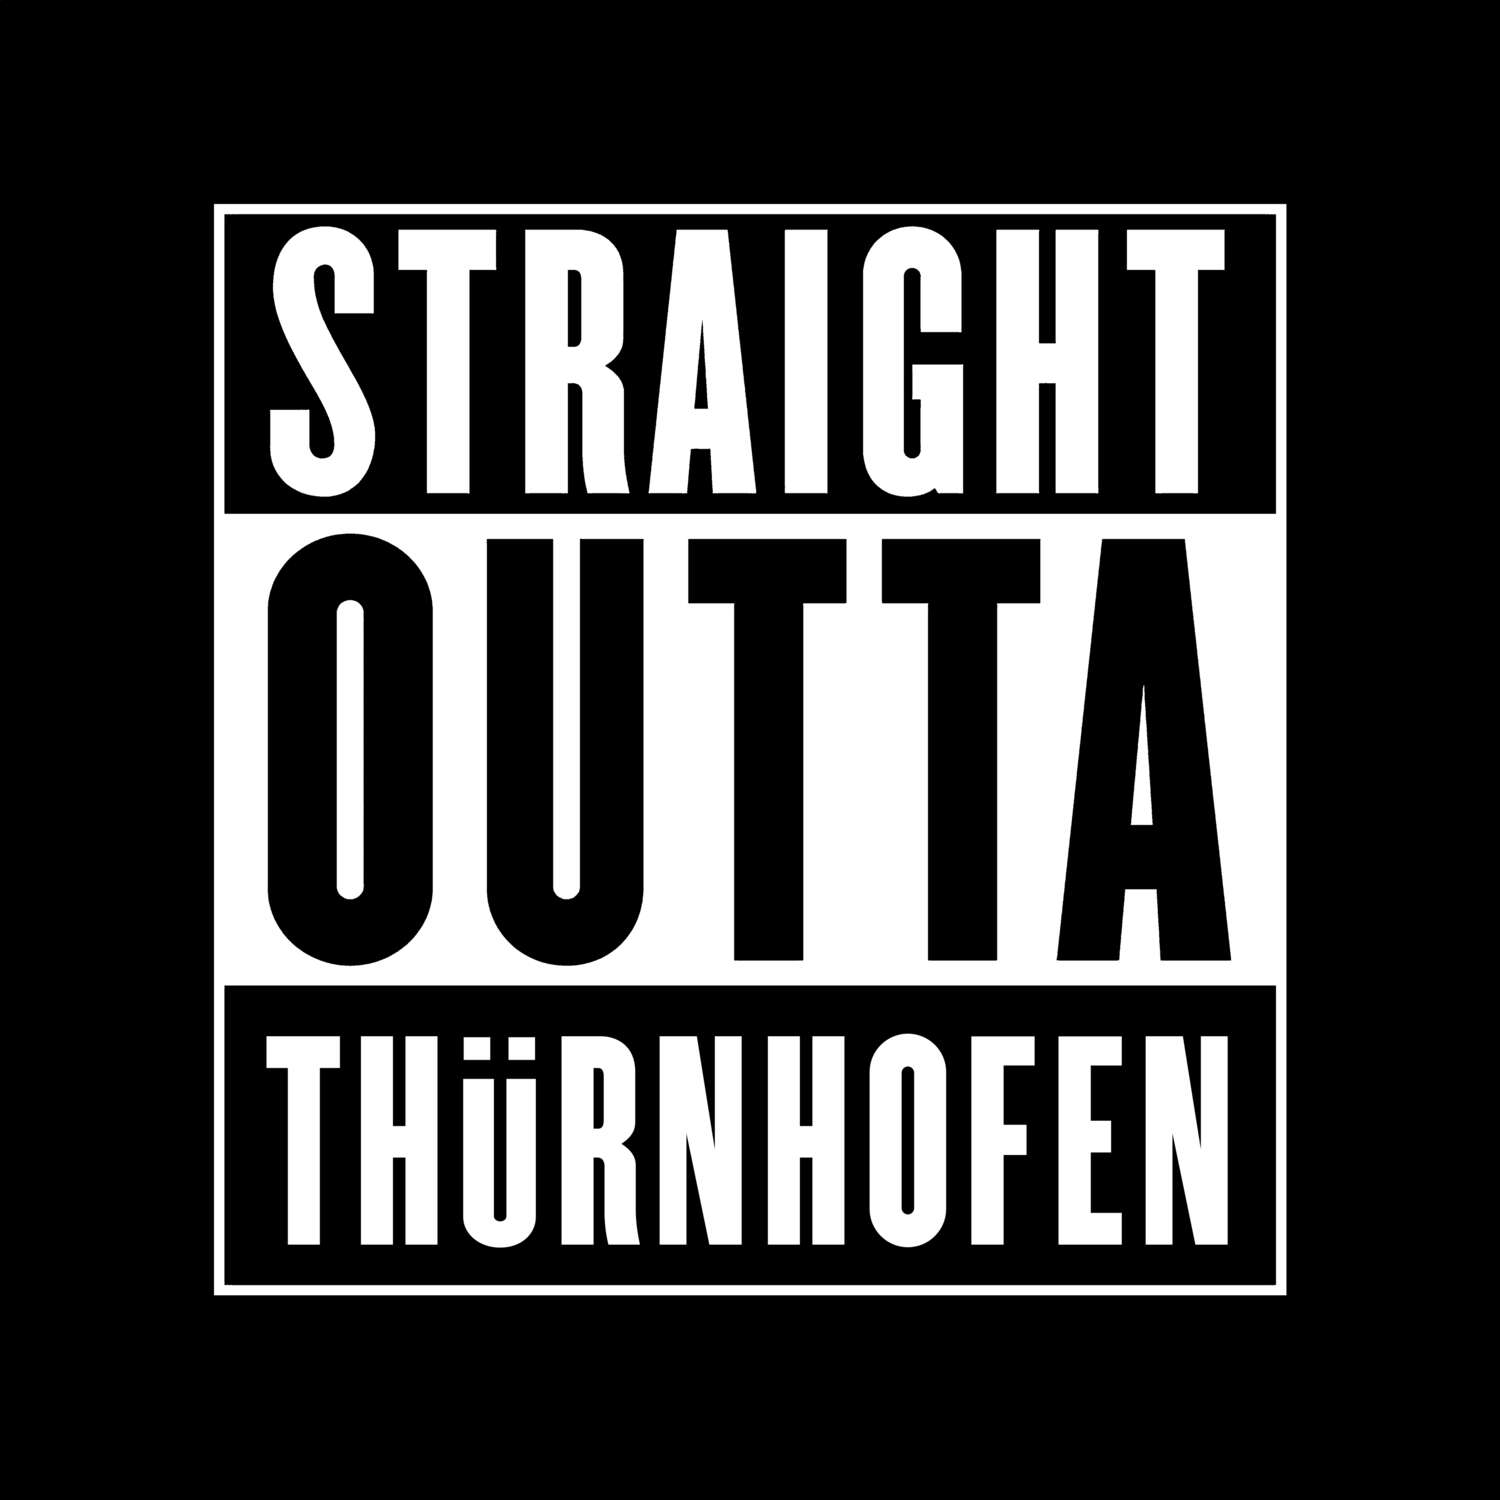 Thürnhofen T-Shirt »Straight Outta«